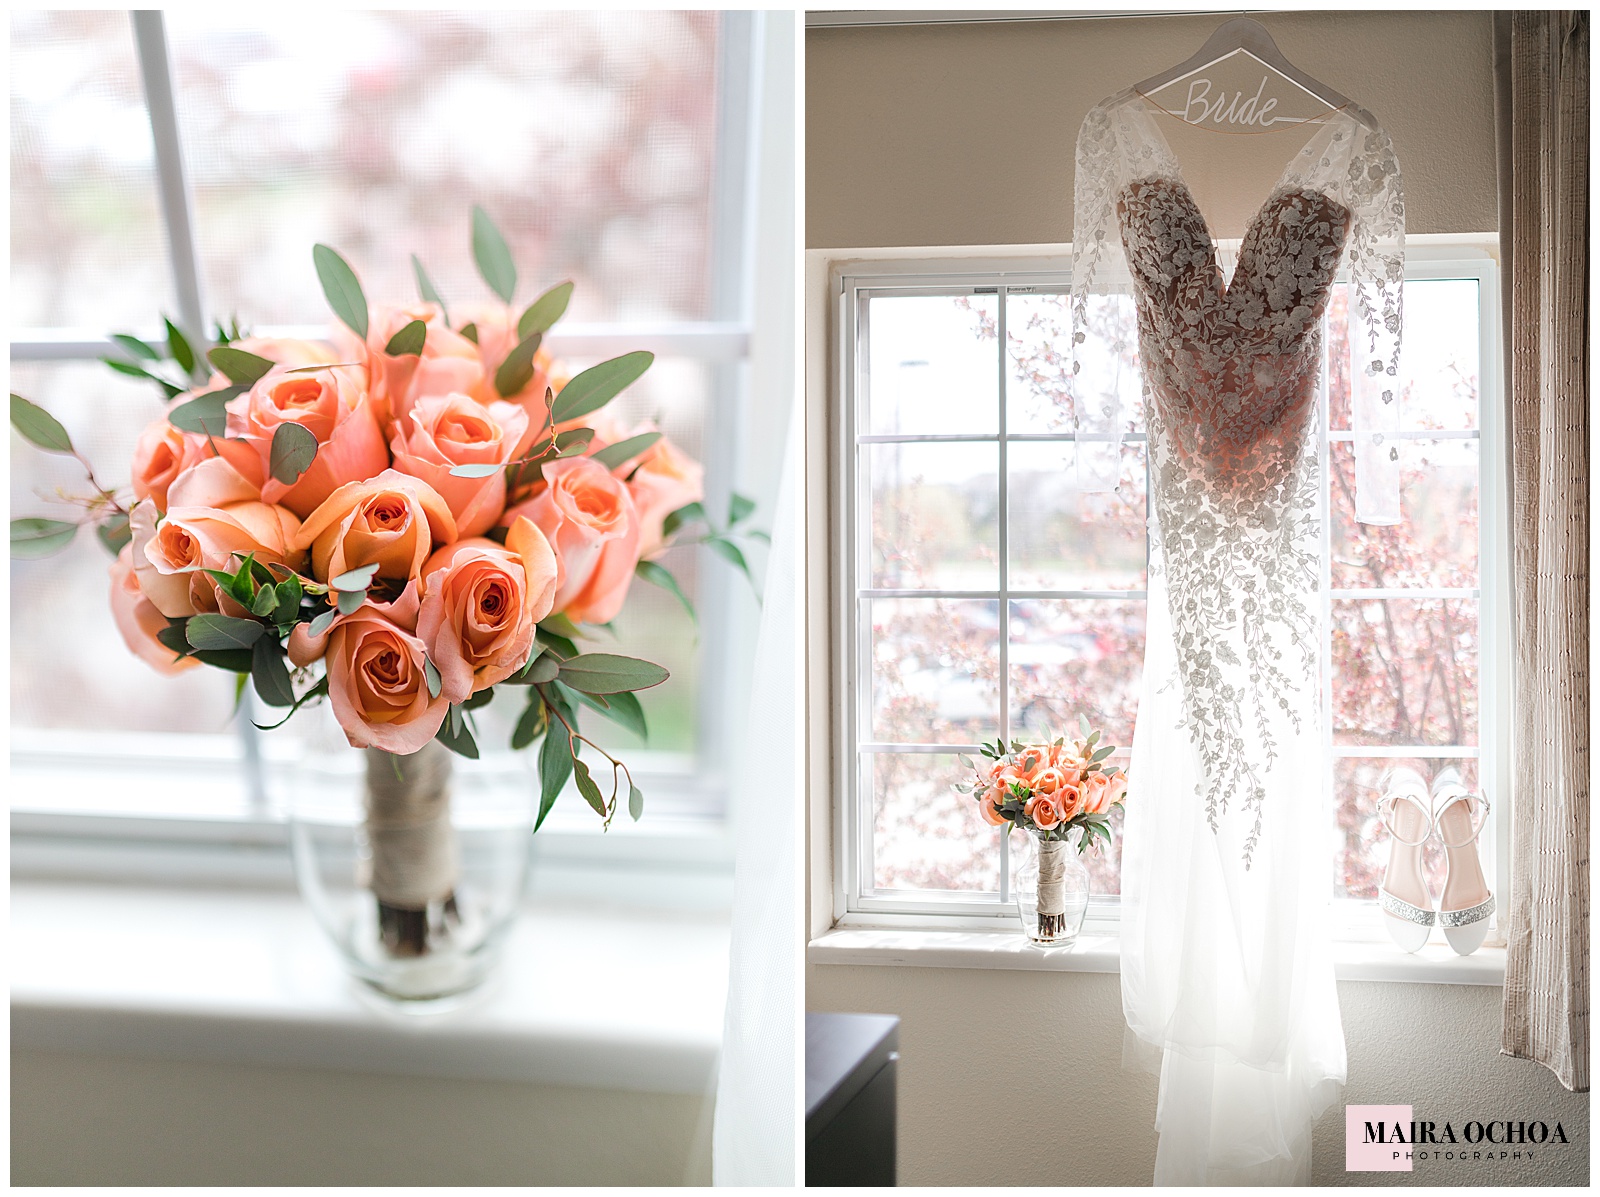 Wedding Dress and Bride Bouquet Wedding Details